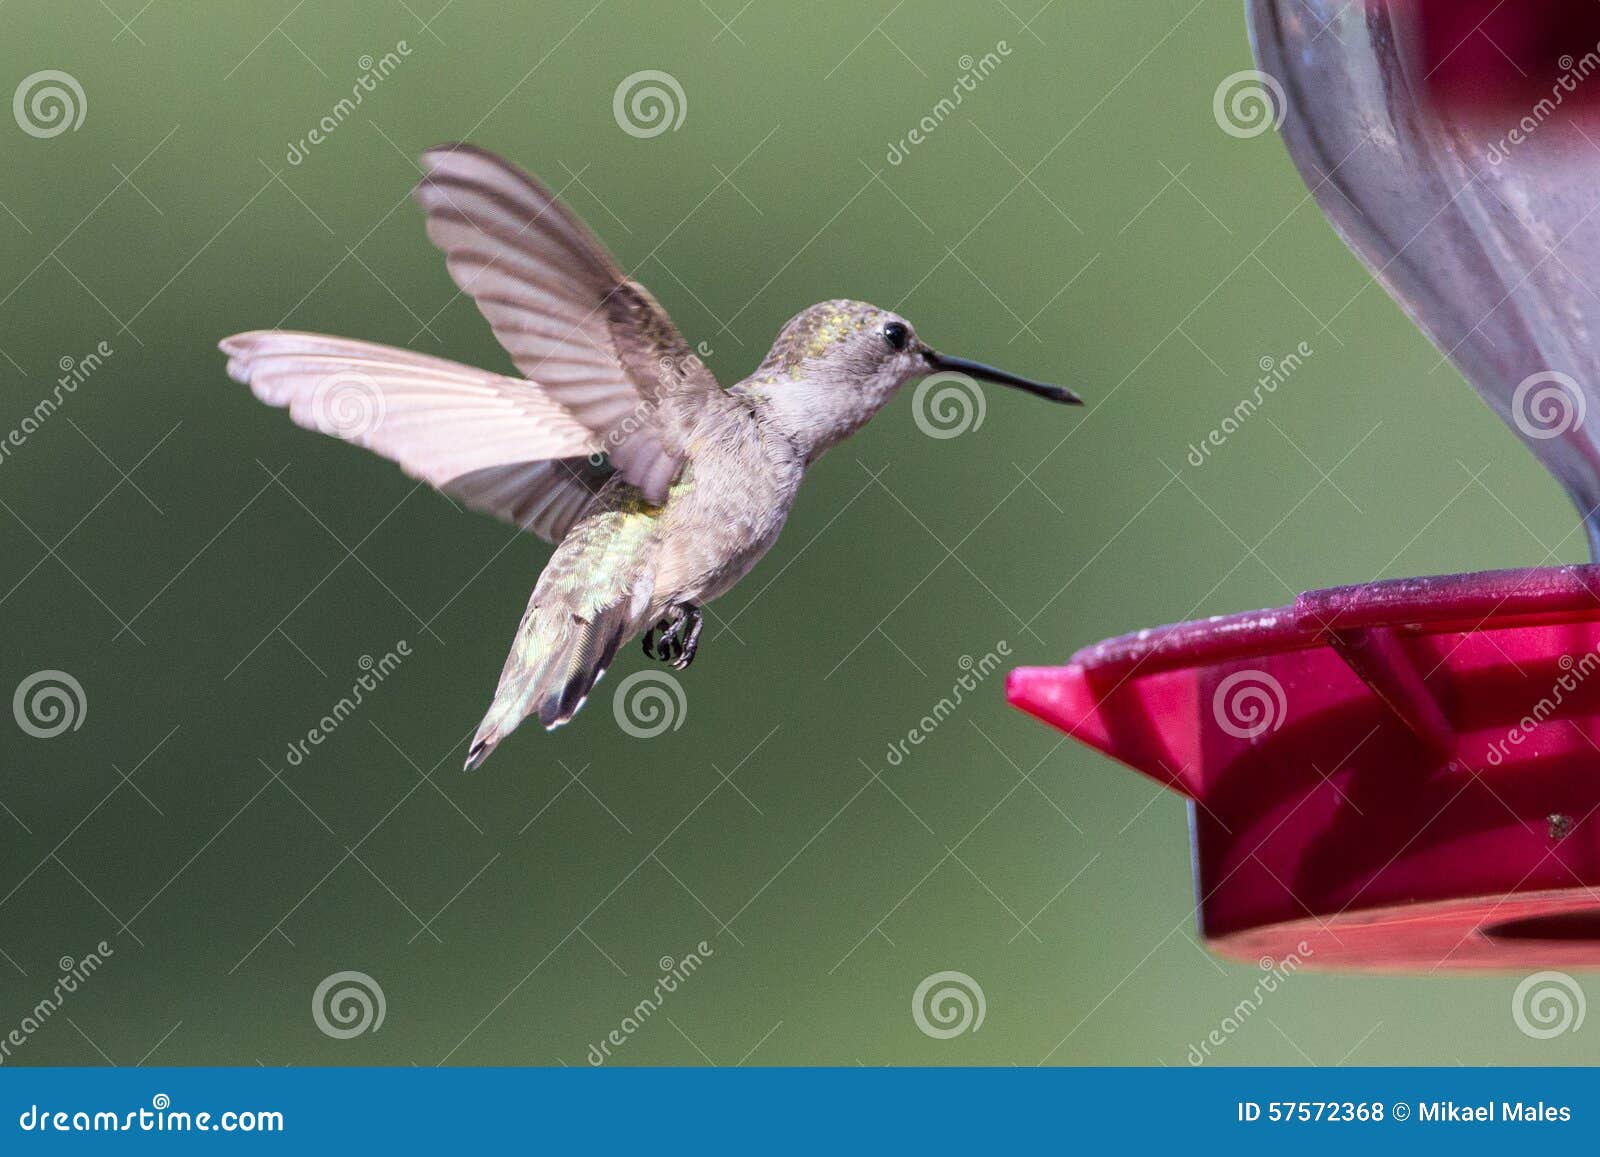 hummingbird flying towards nectar feeder